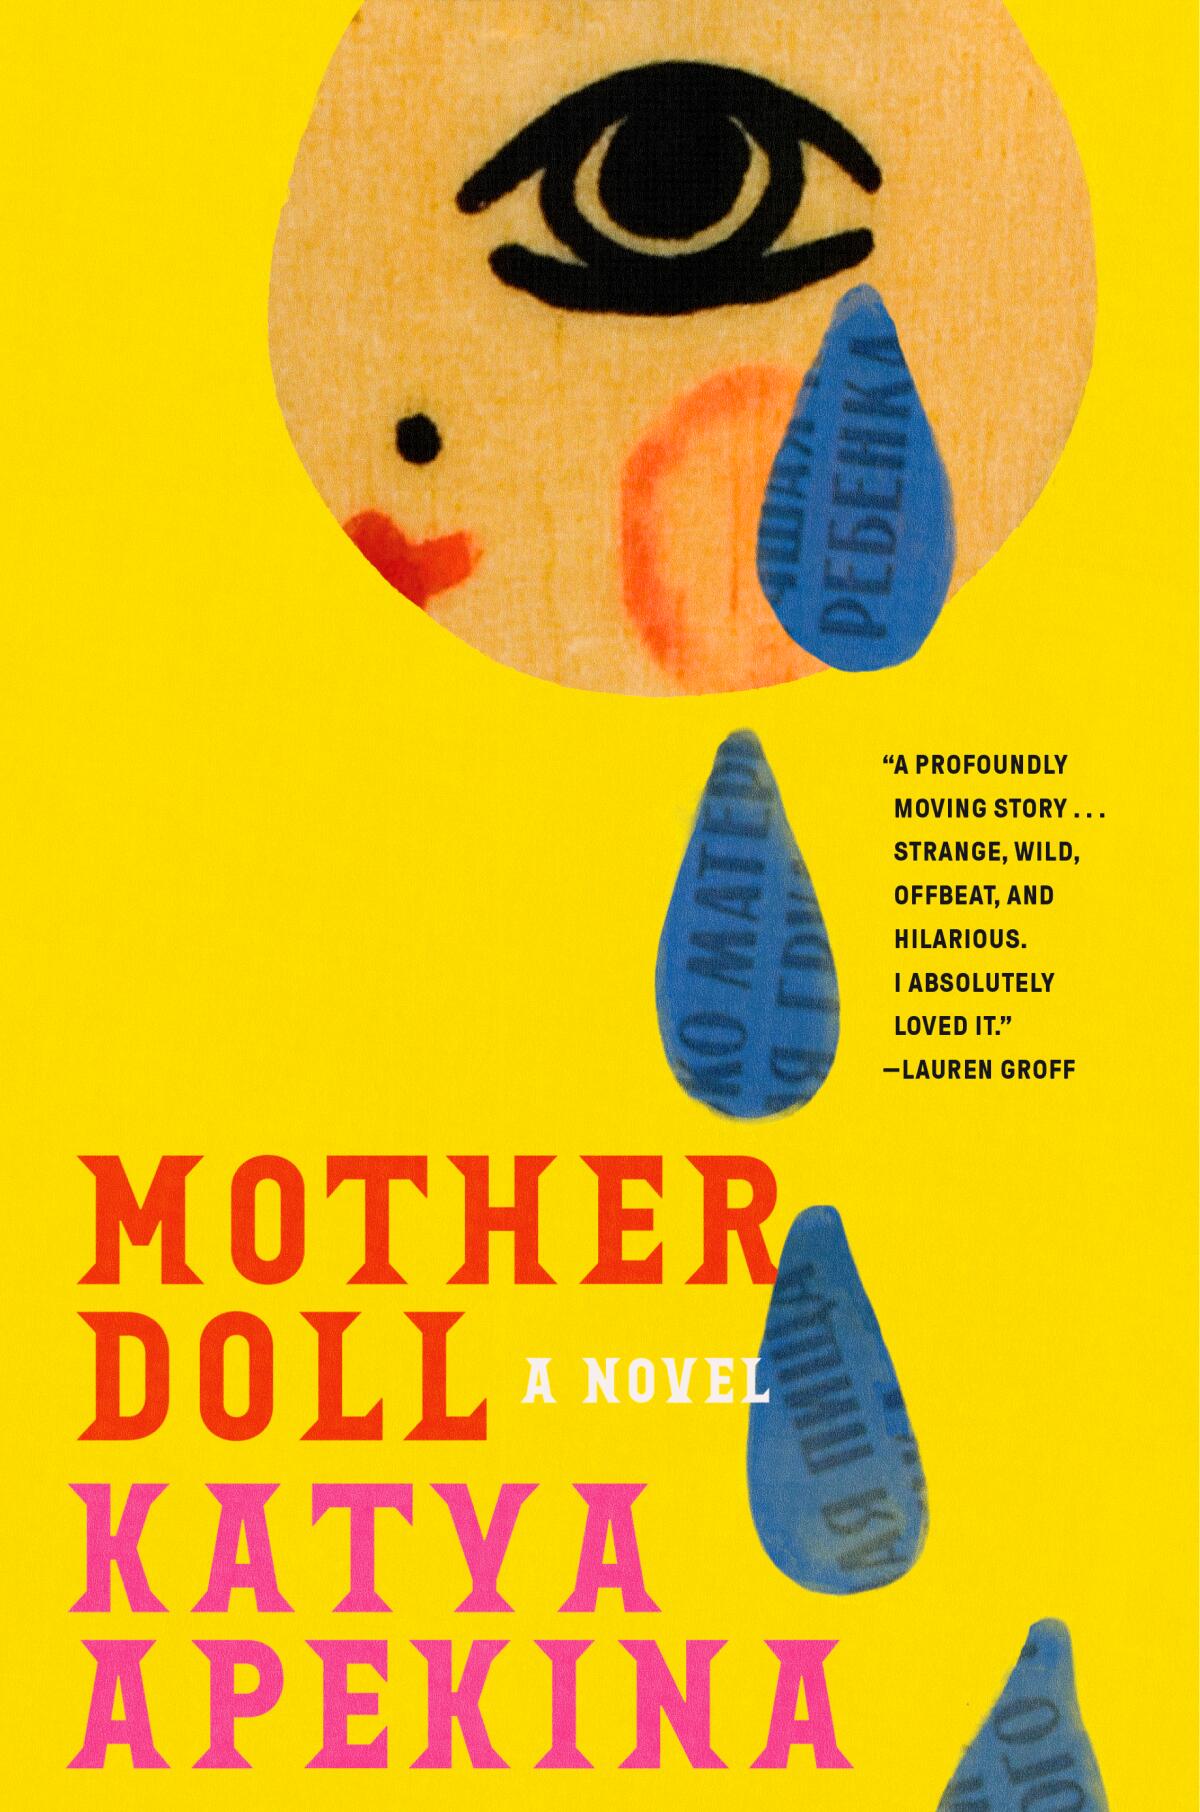 "Mother Doll" by Katya Apekina